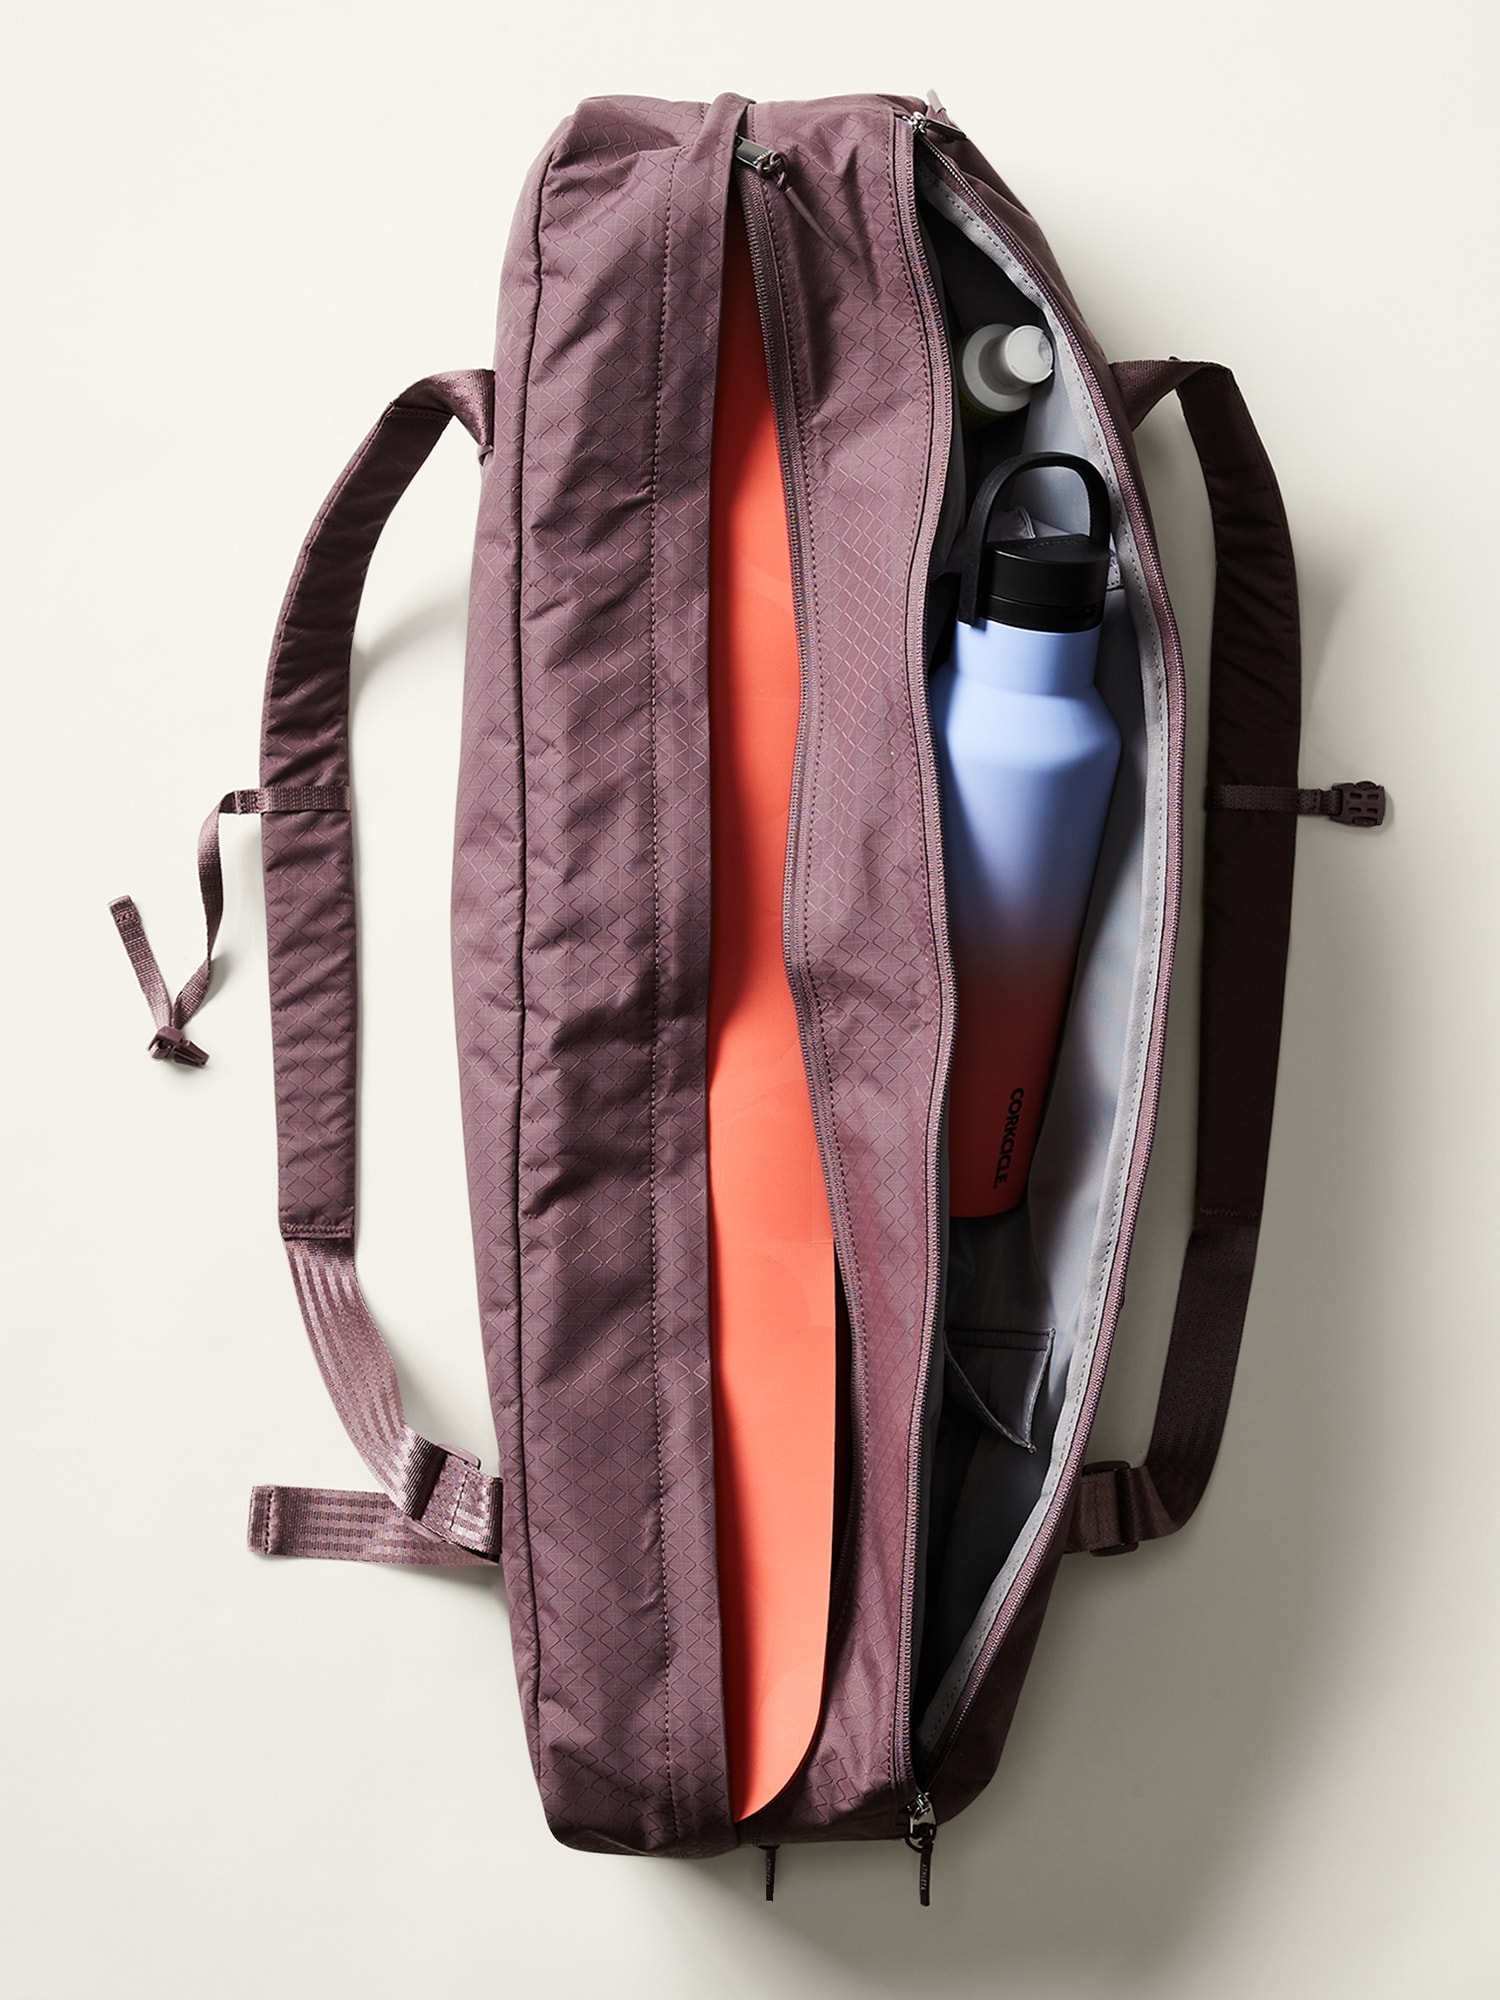 Buy ECOSAC Yoga Mat Bag - Soft, Light, Durable, Grey Online at